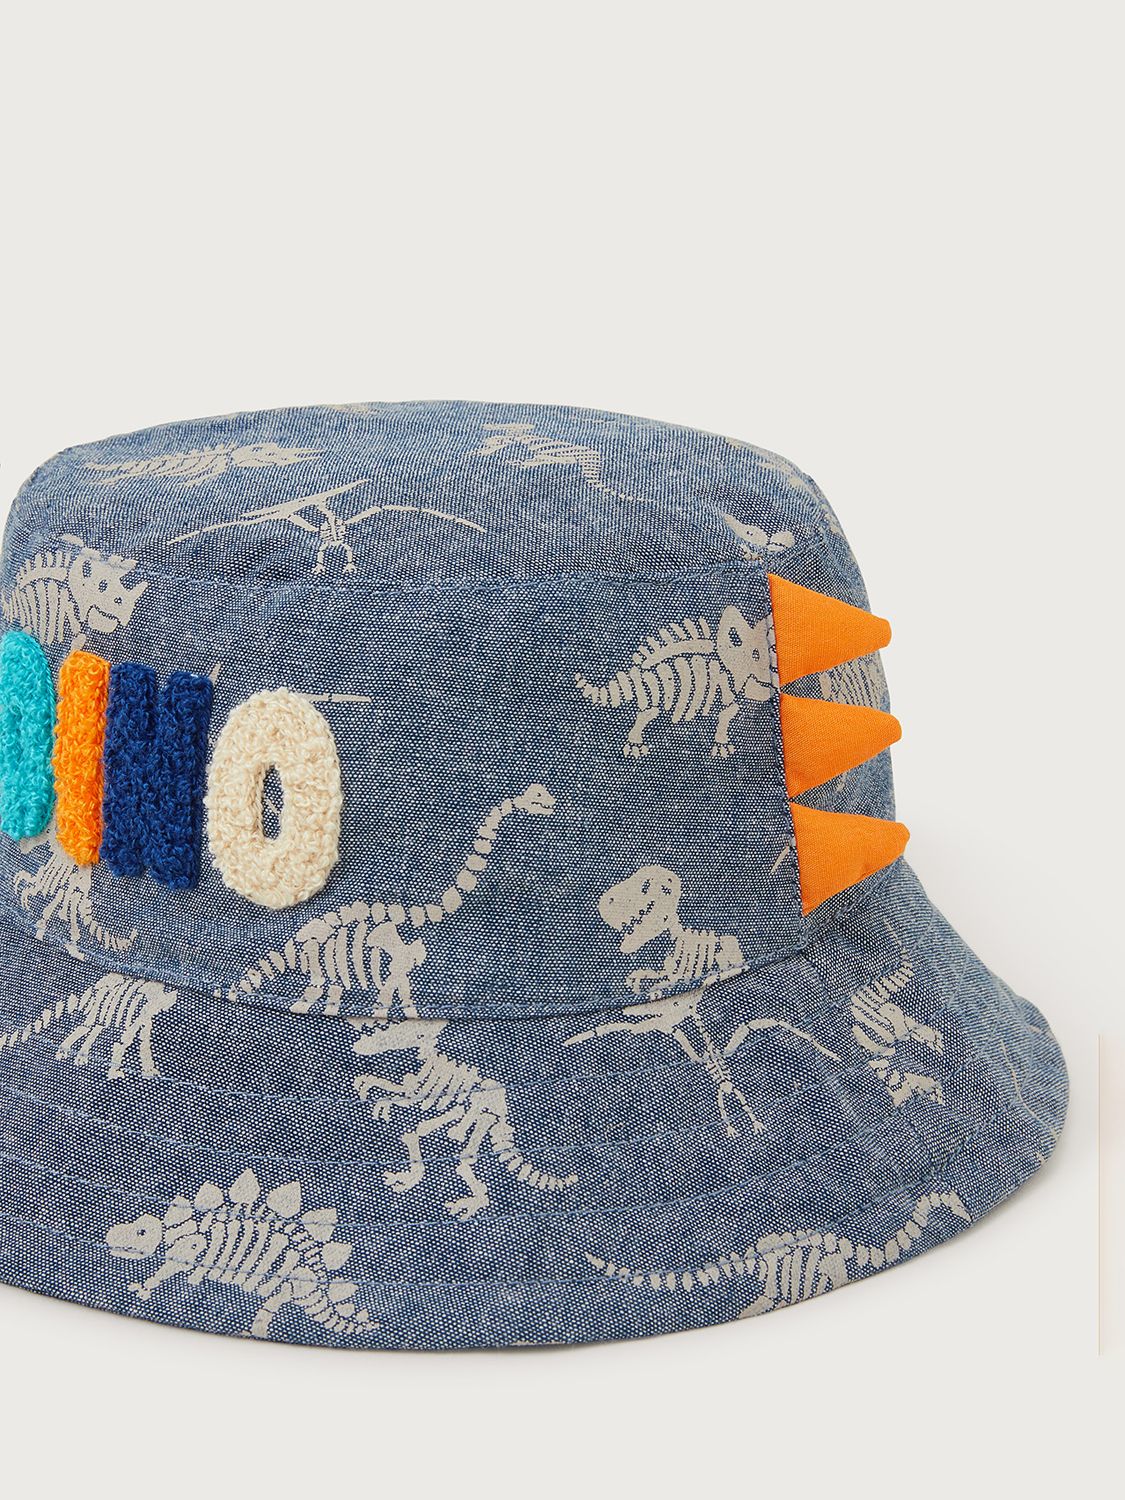 Monsoon Kids' Dino Bucket Hat, Multi, 1-3 years